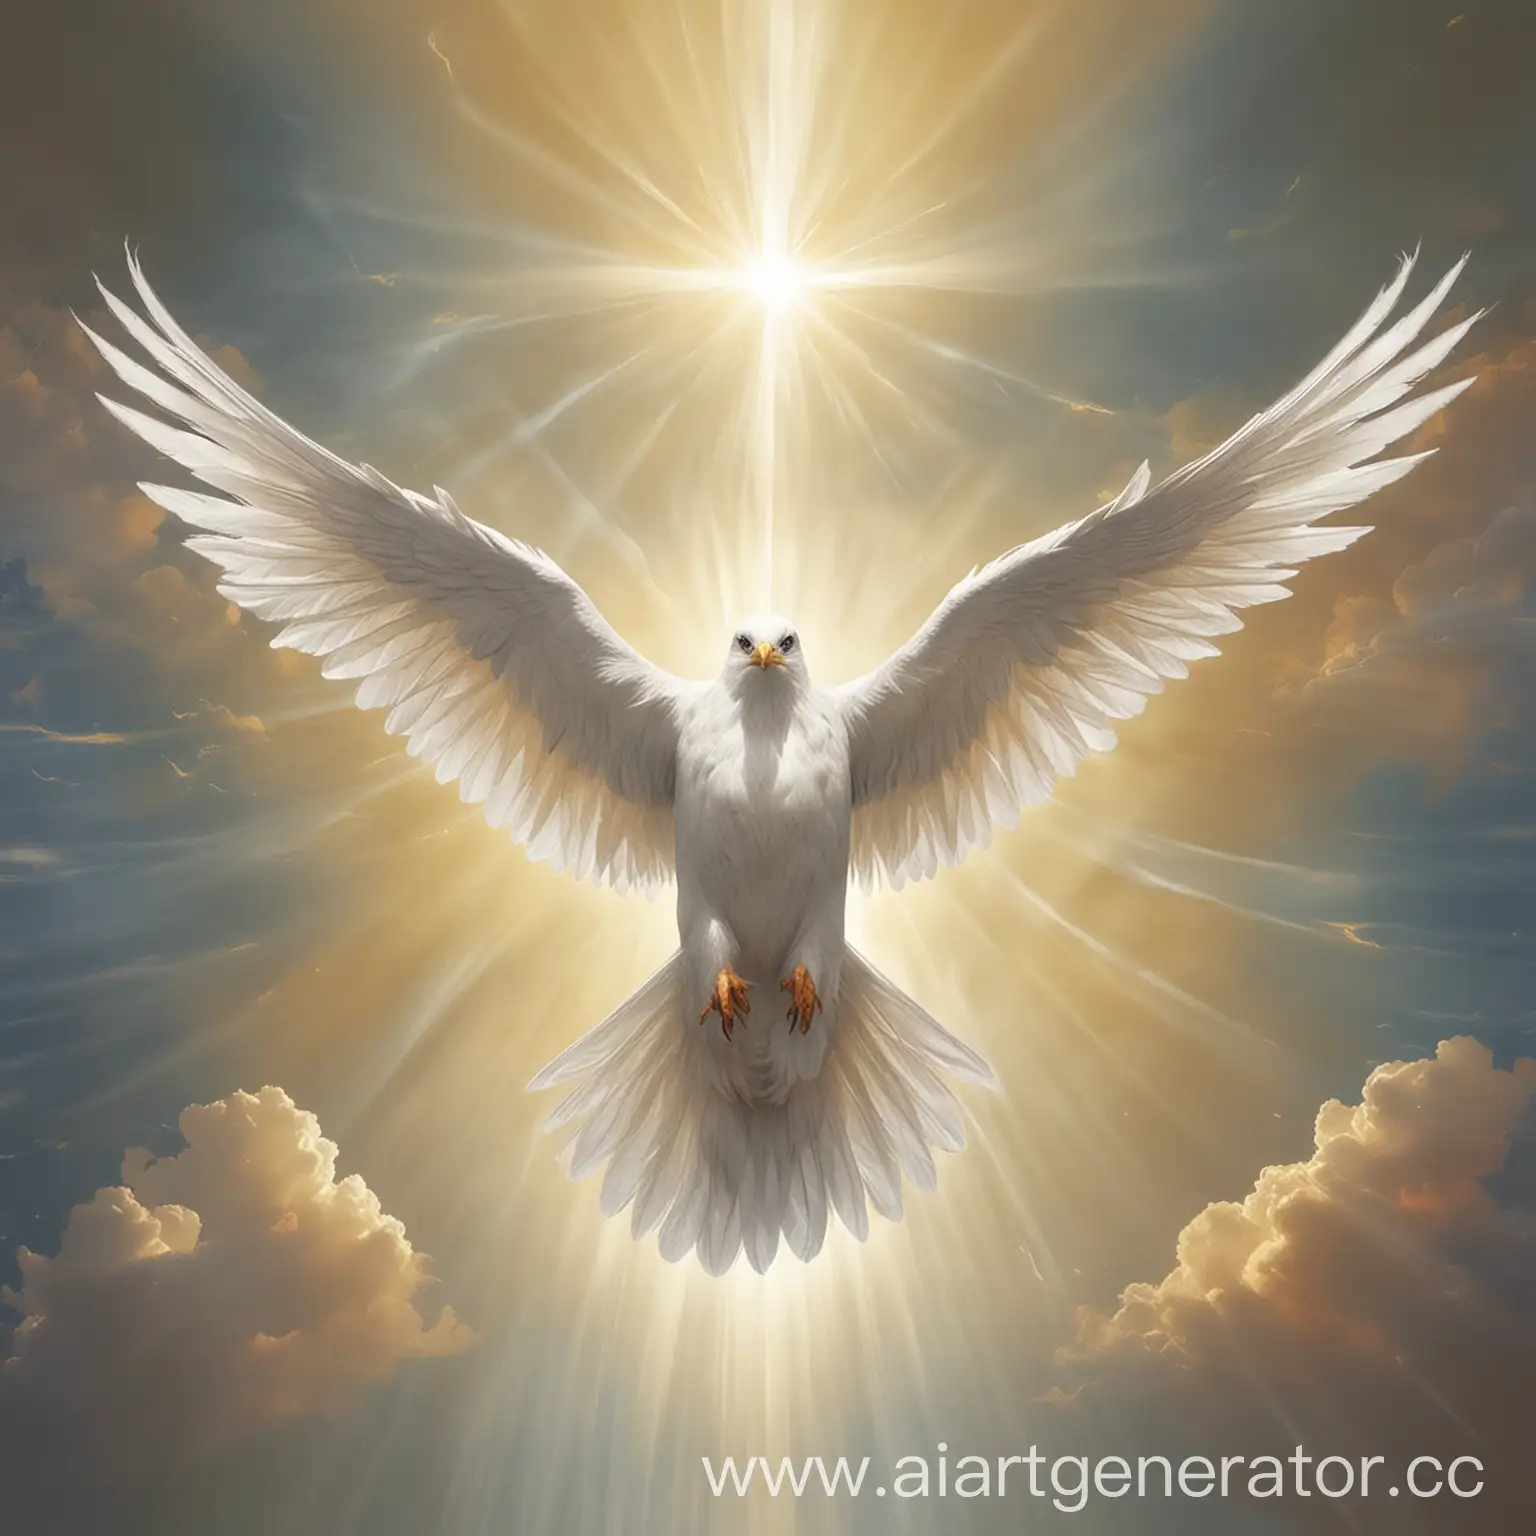 Divine-Presence-of-the-Holy-Spirit